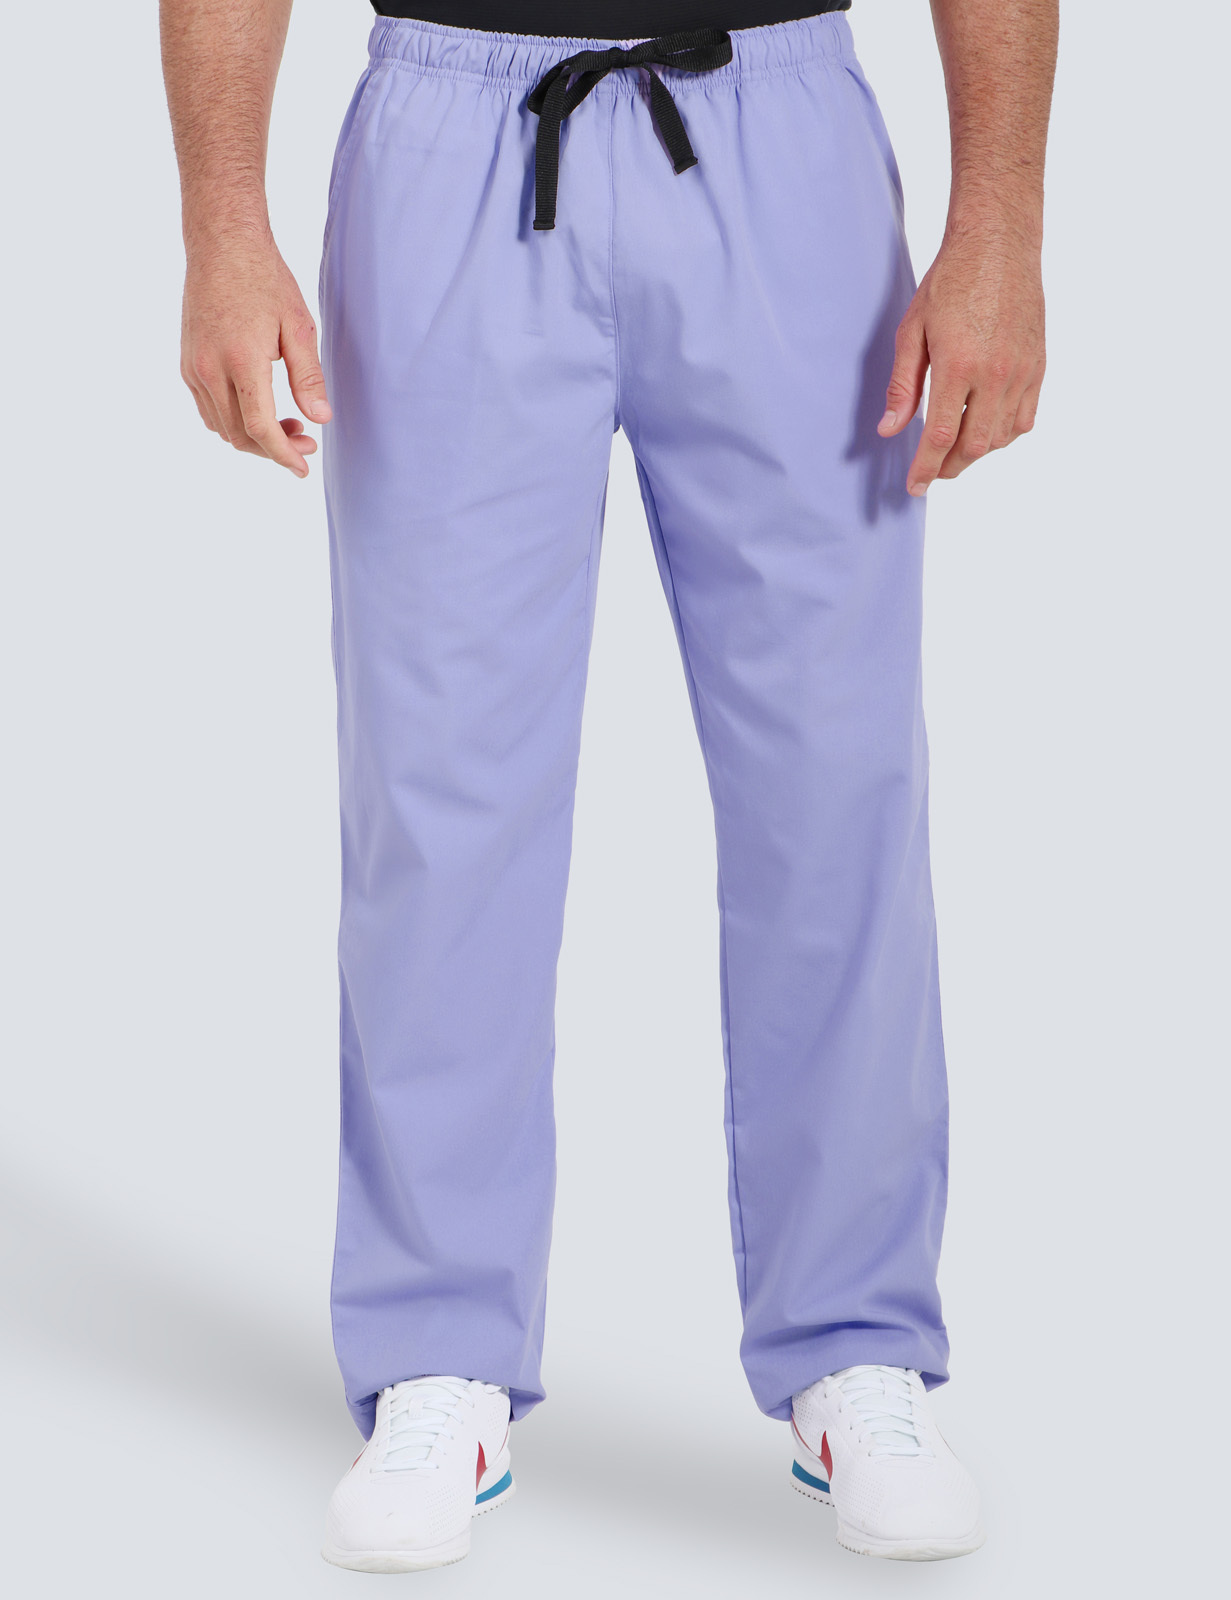 Men's Regular Cut Pants - Lilac - Medium